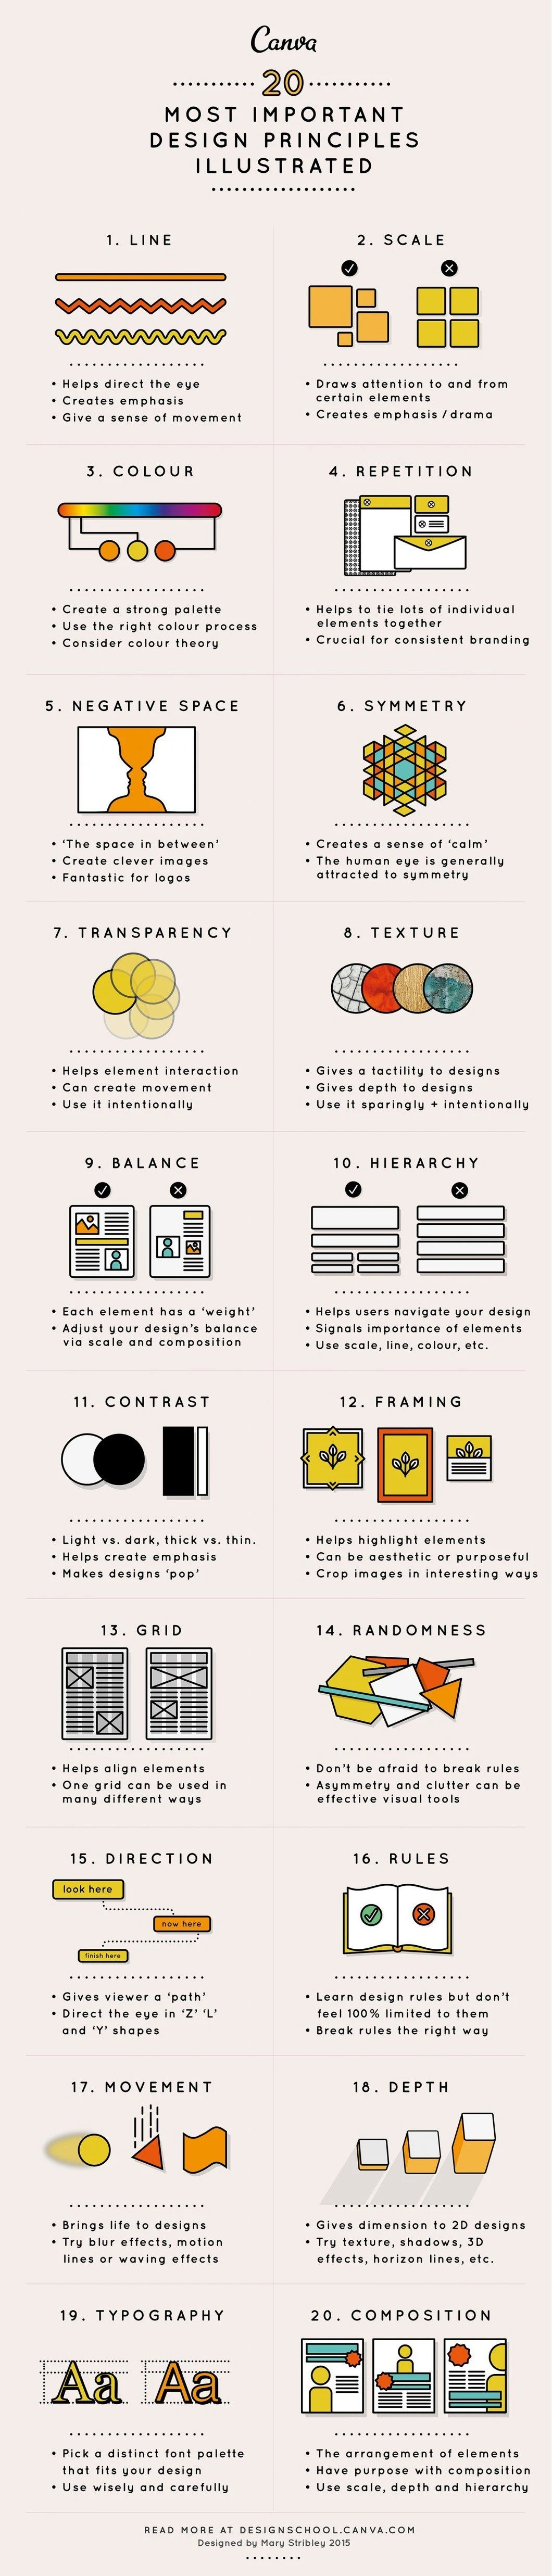 Design Elements & Principles - #infographic